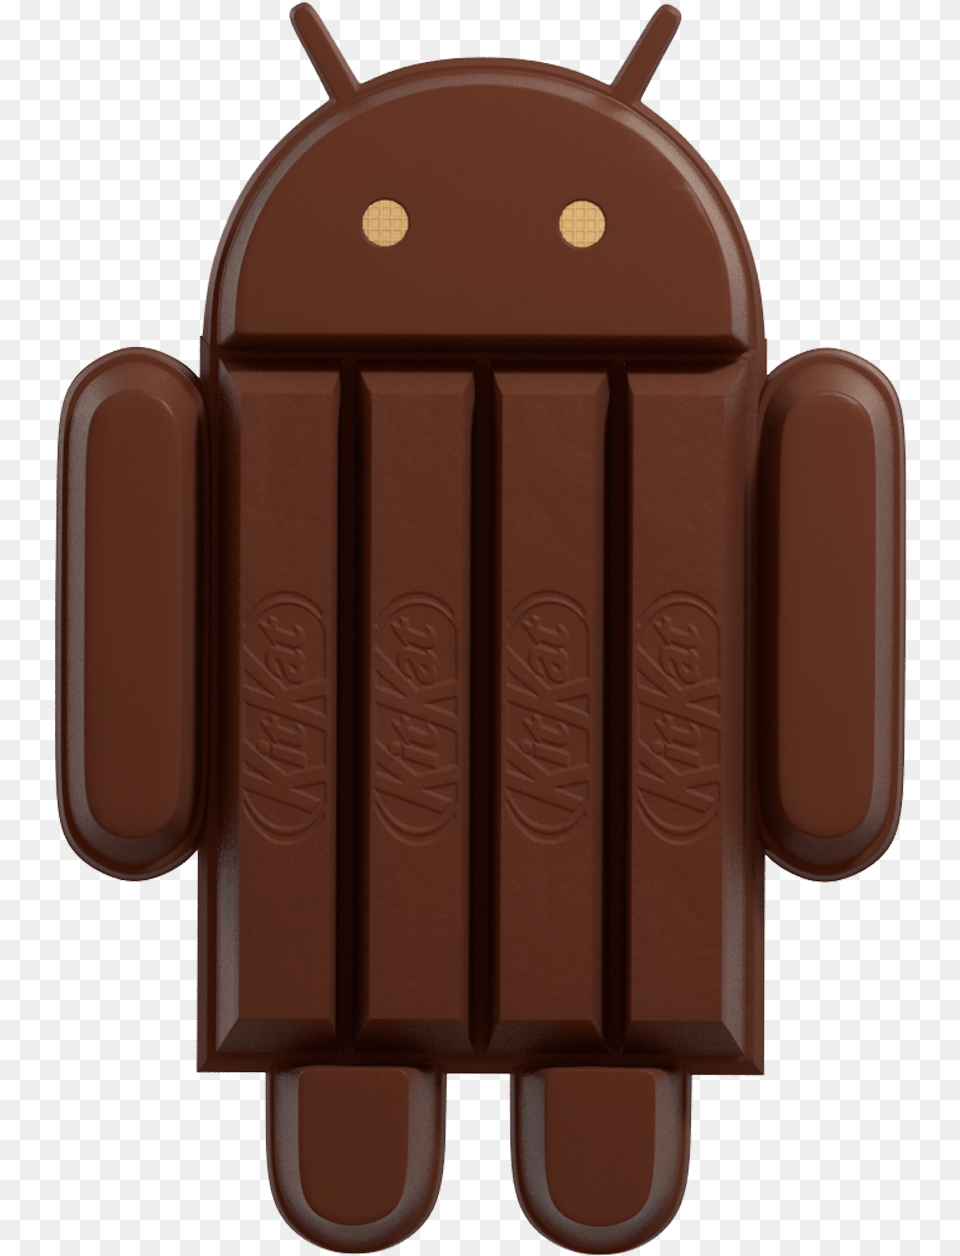 Kitkat Android Kitkat, Food, Sweets, Dessert Free Transparent Png